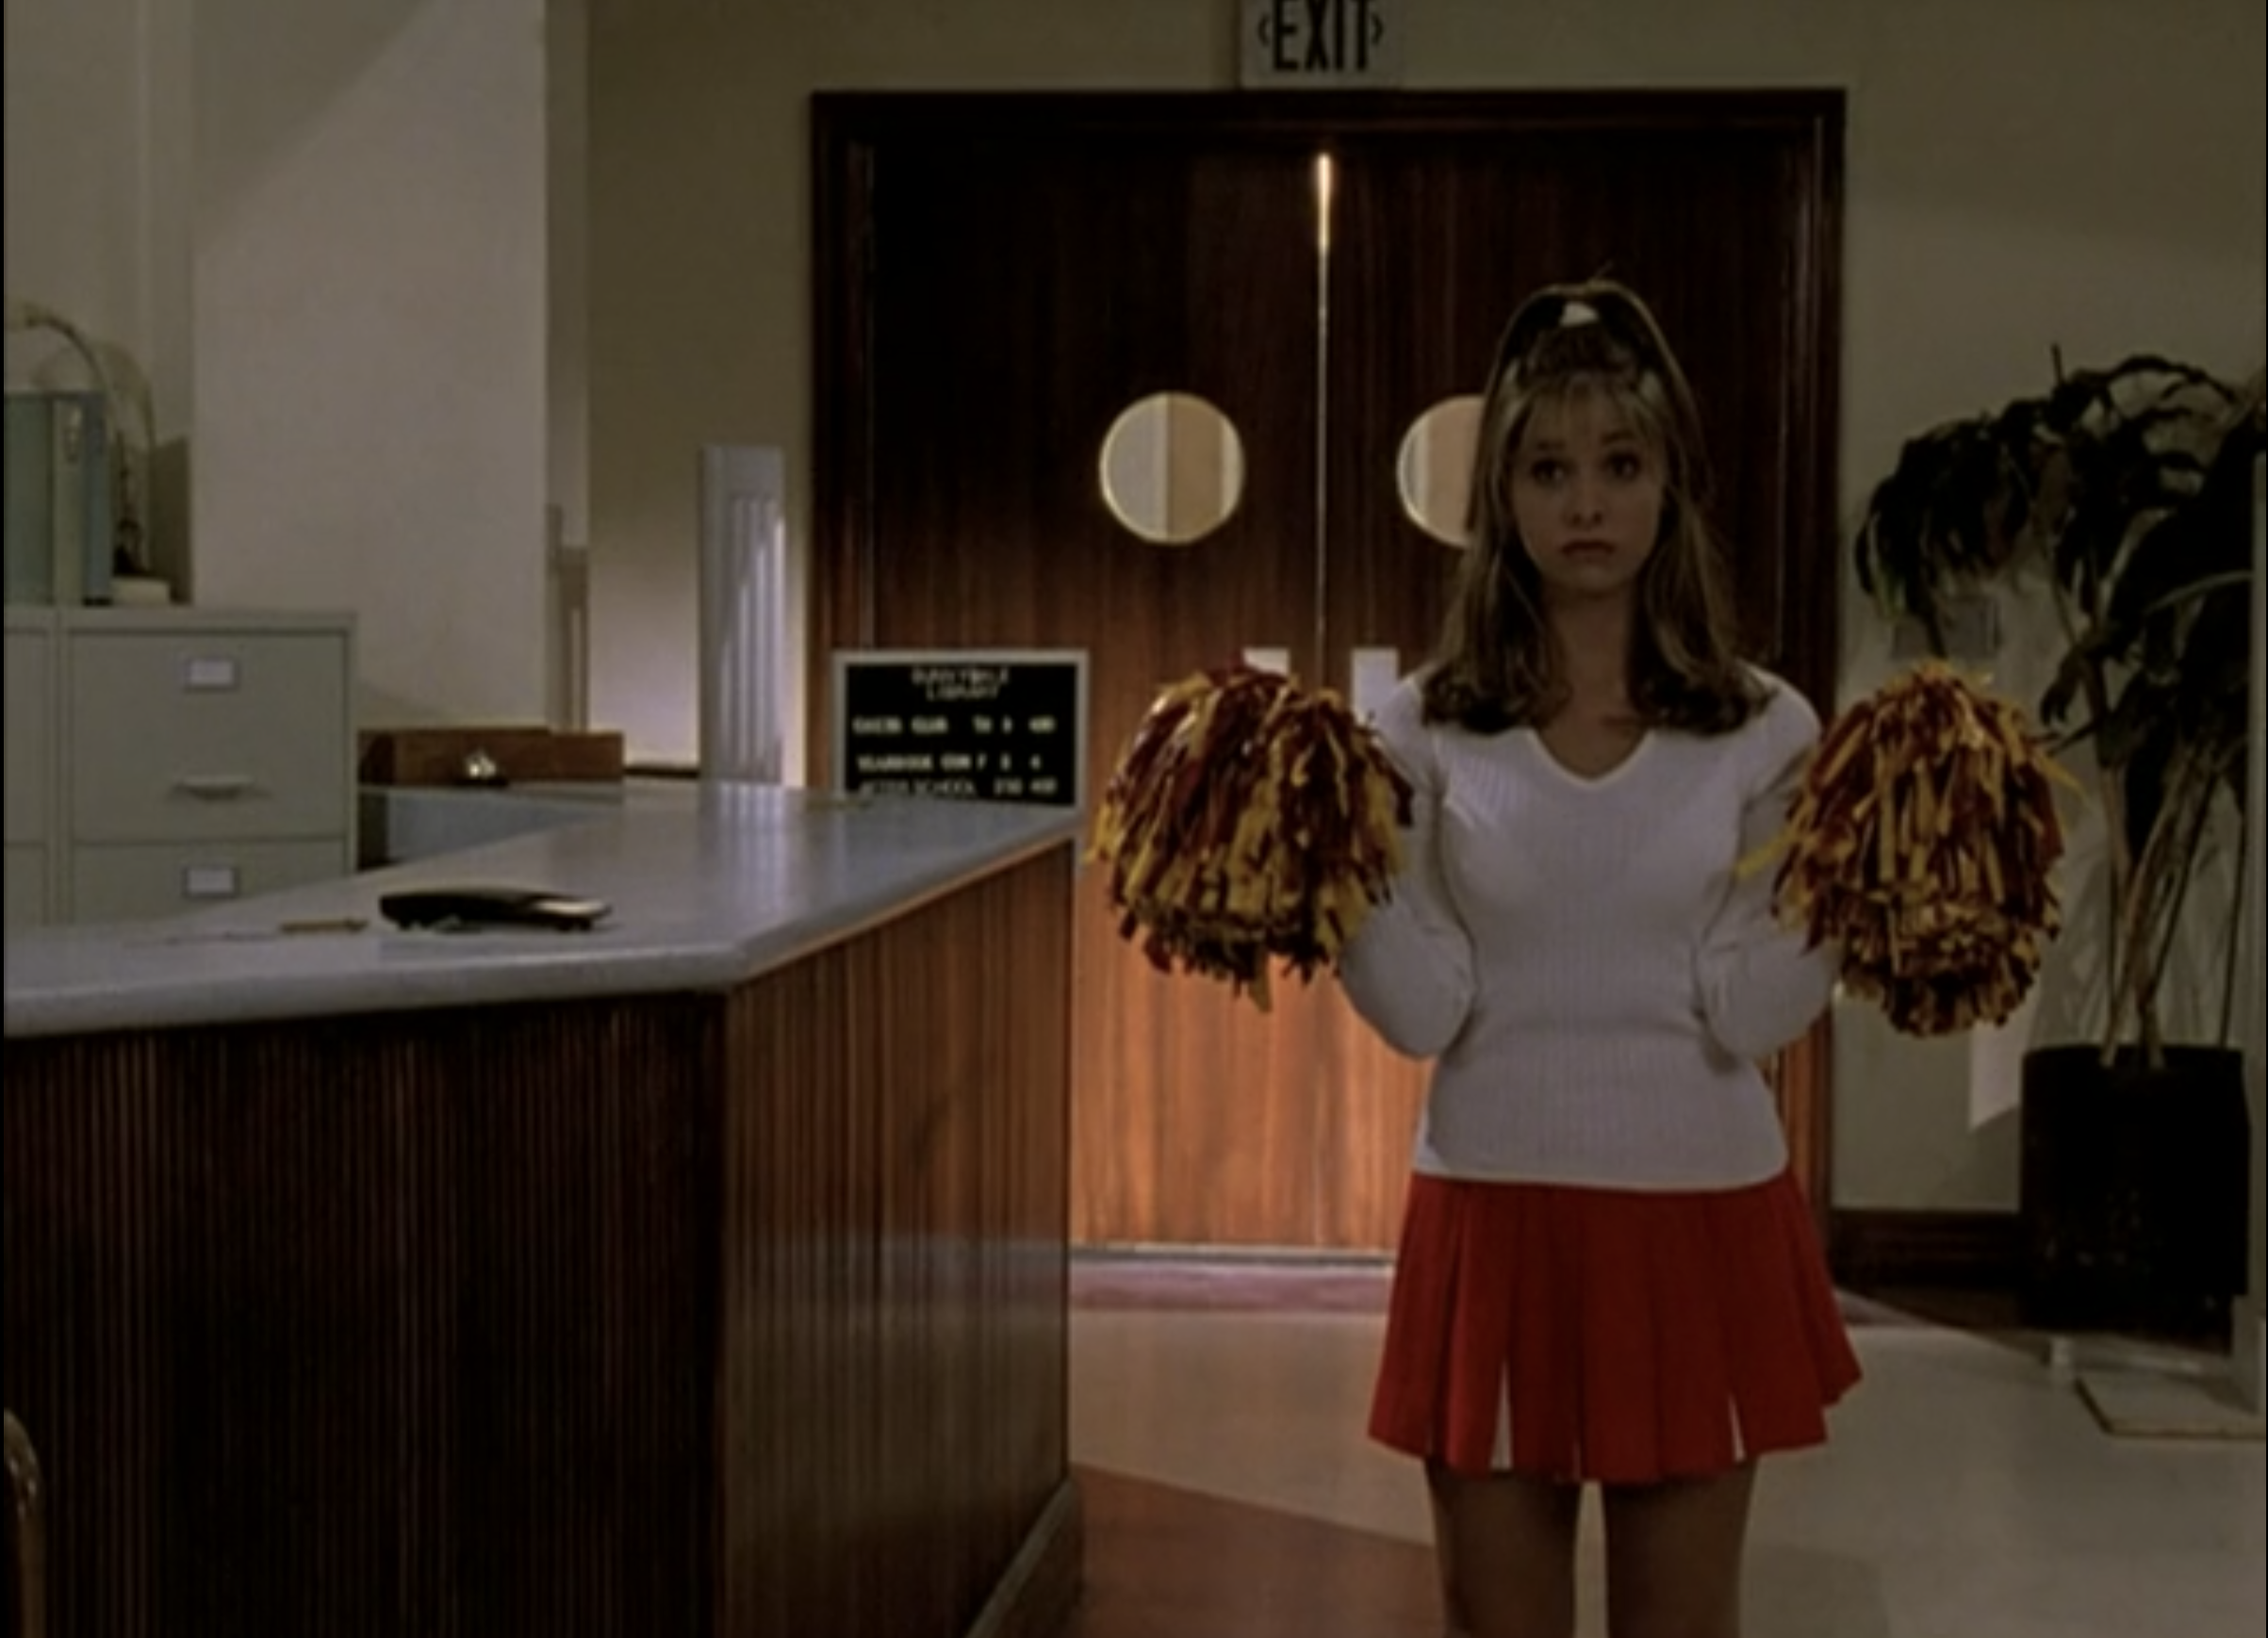 Buffy The Vampire Slayer. Season 1, Episode 3: "The Witch." 1997-2003. 20th Century Studios.